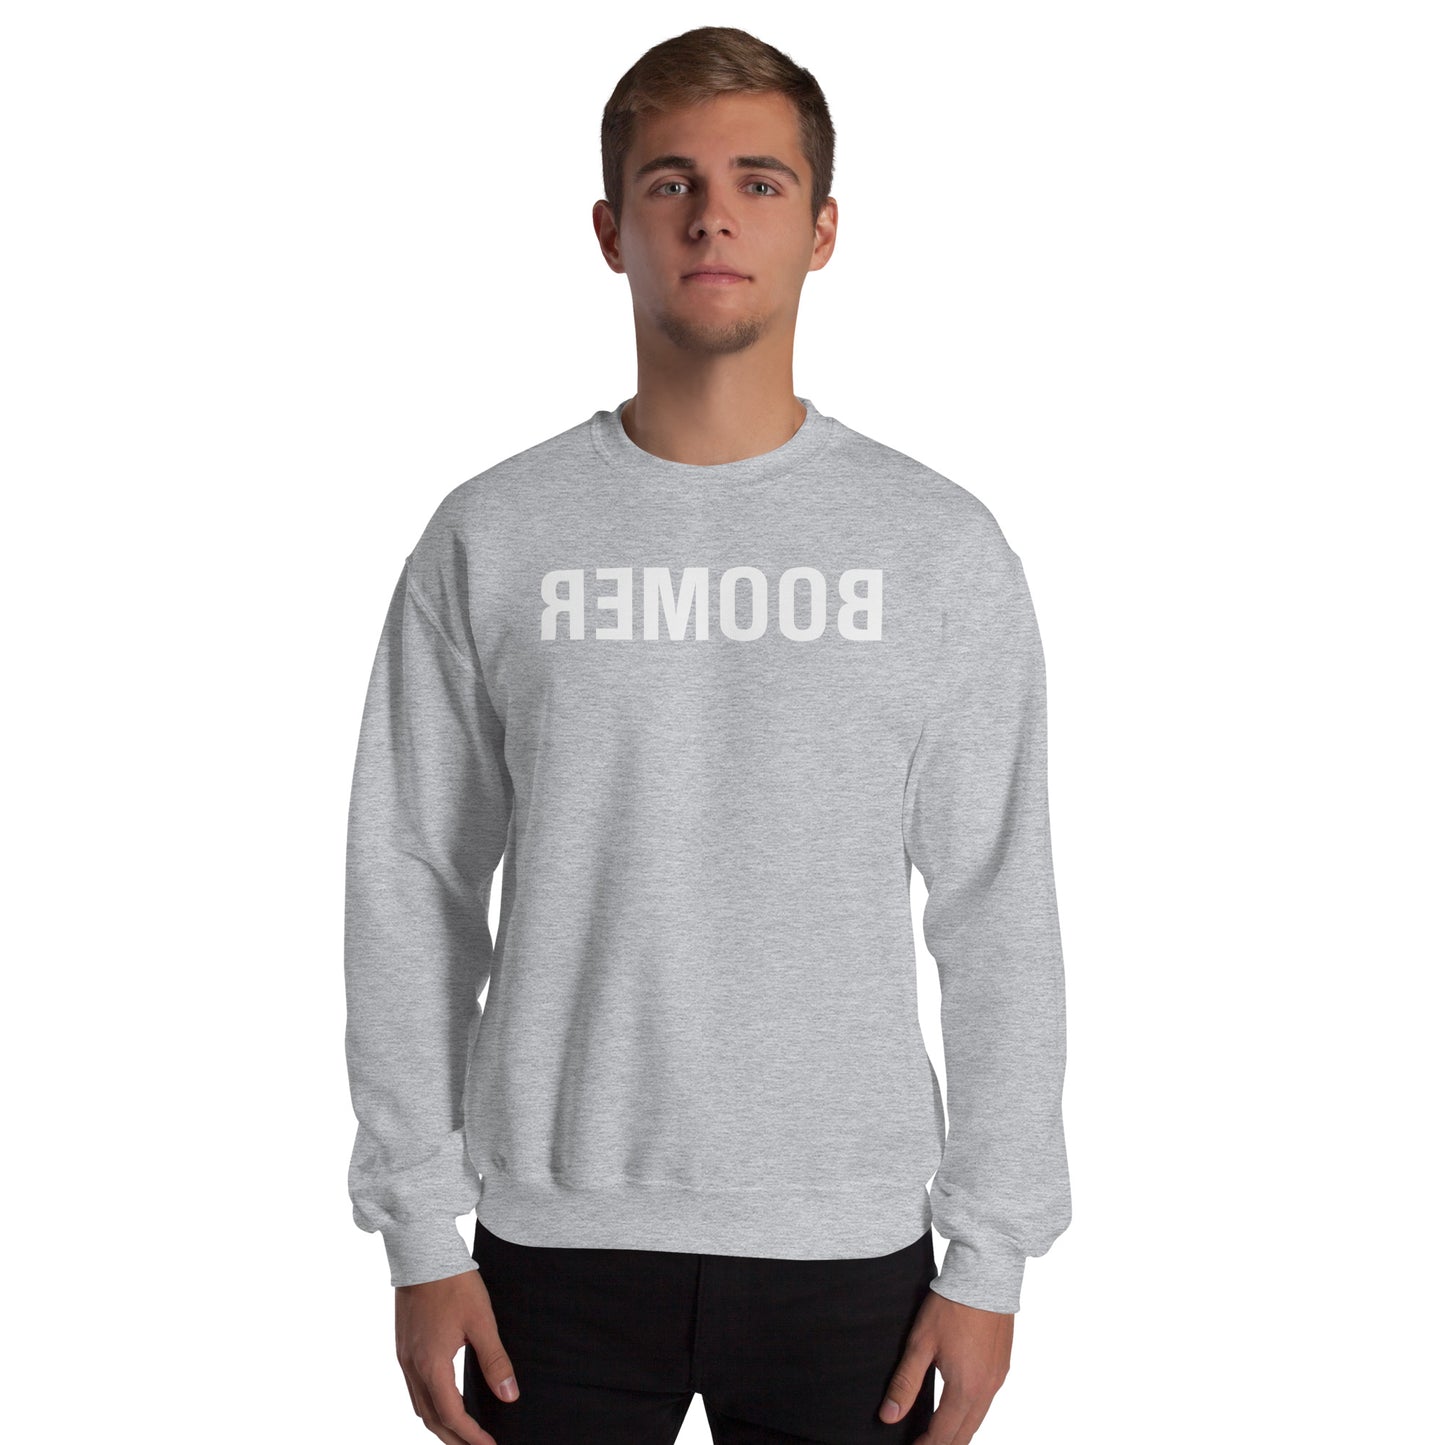 Designer Reverse Sweatshirt